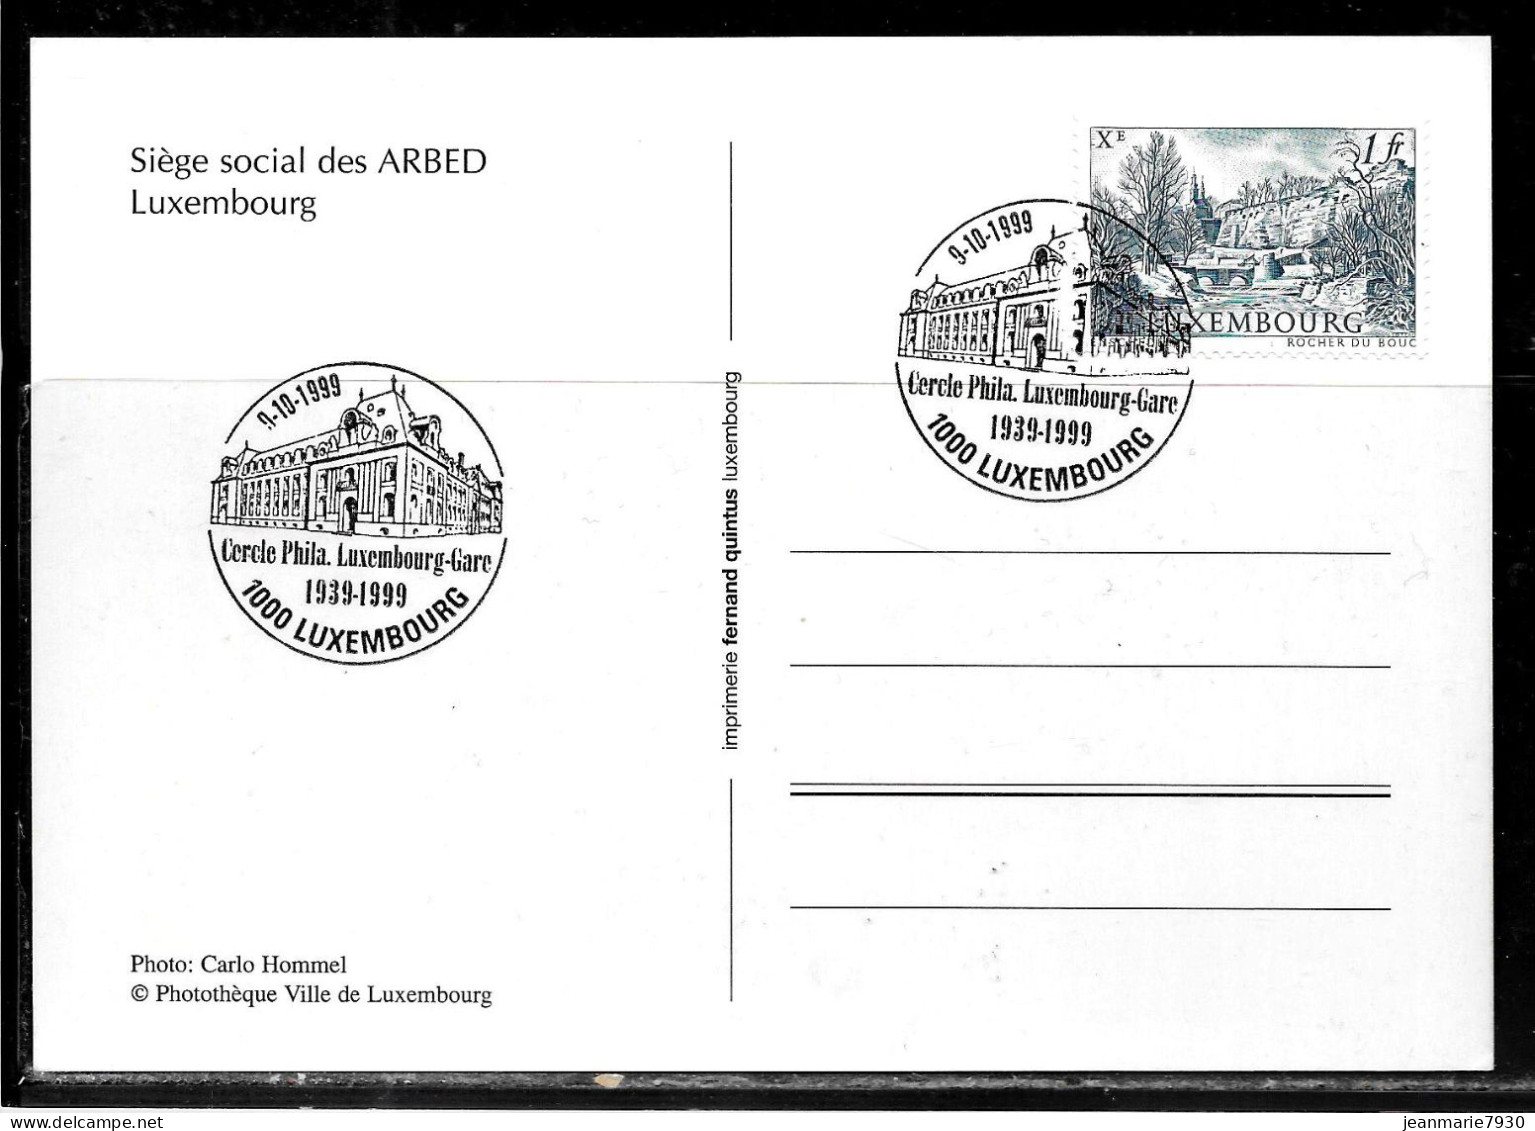 H366 - CARTE POSTALE DE LUXEMBOURG DU 09/10/99 - SIEGE DE L'ARBED - Brieven En Documenten